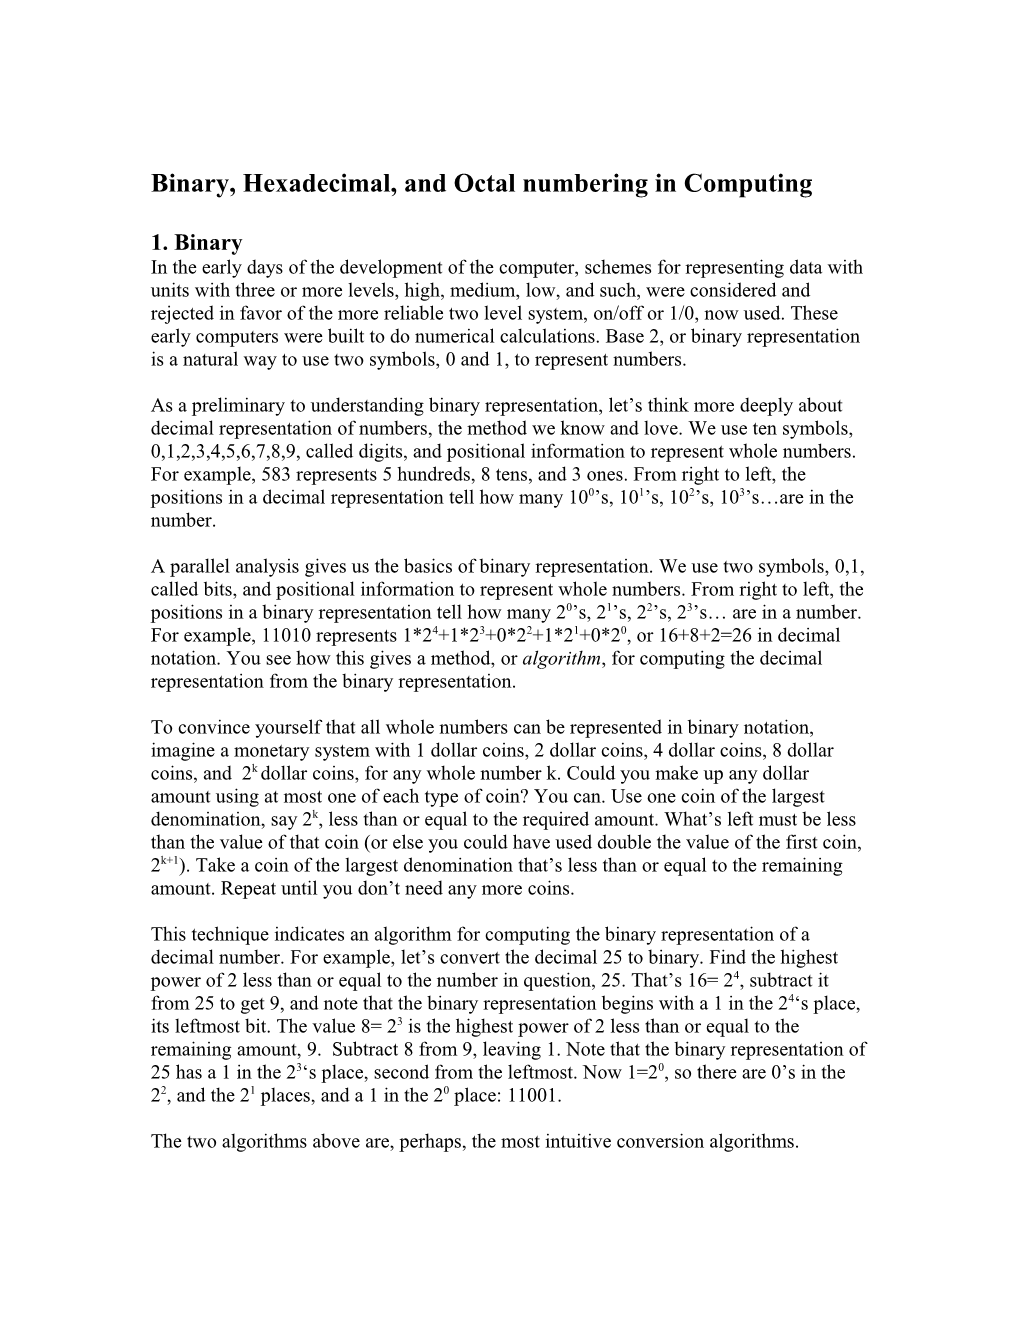 Binary, Hexadecimal, and Octal Numbering in Computing